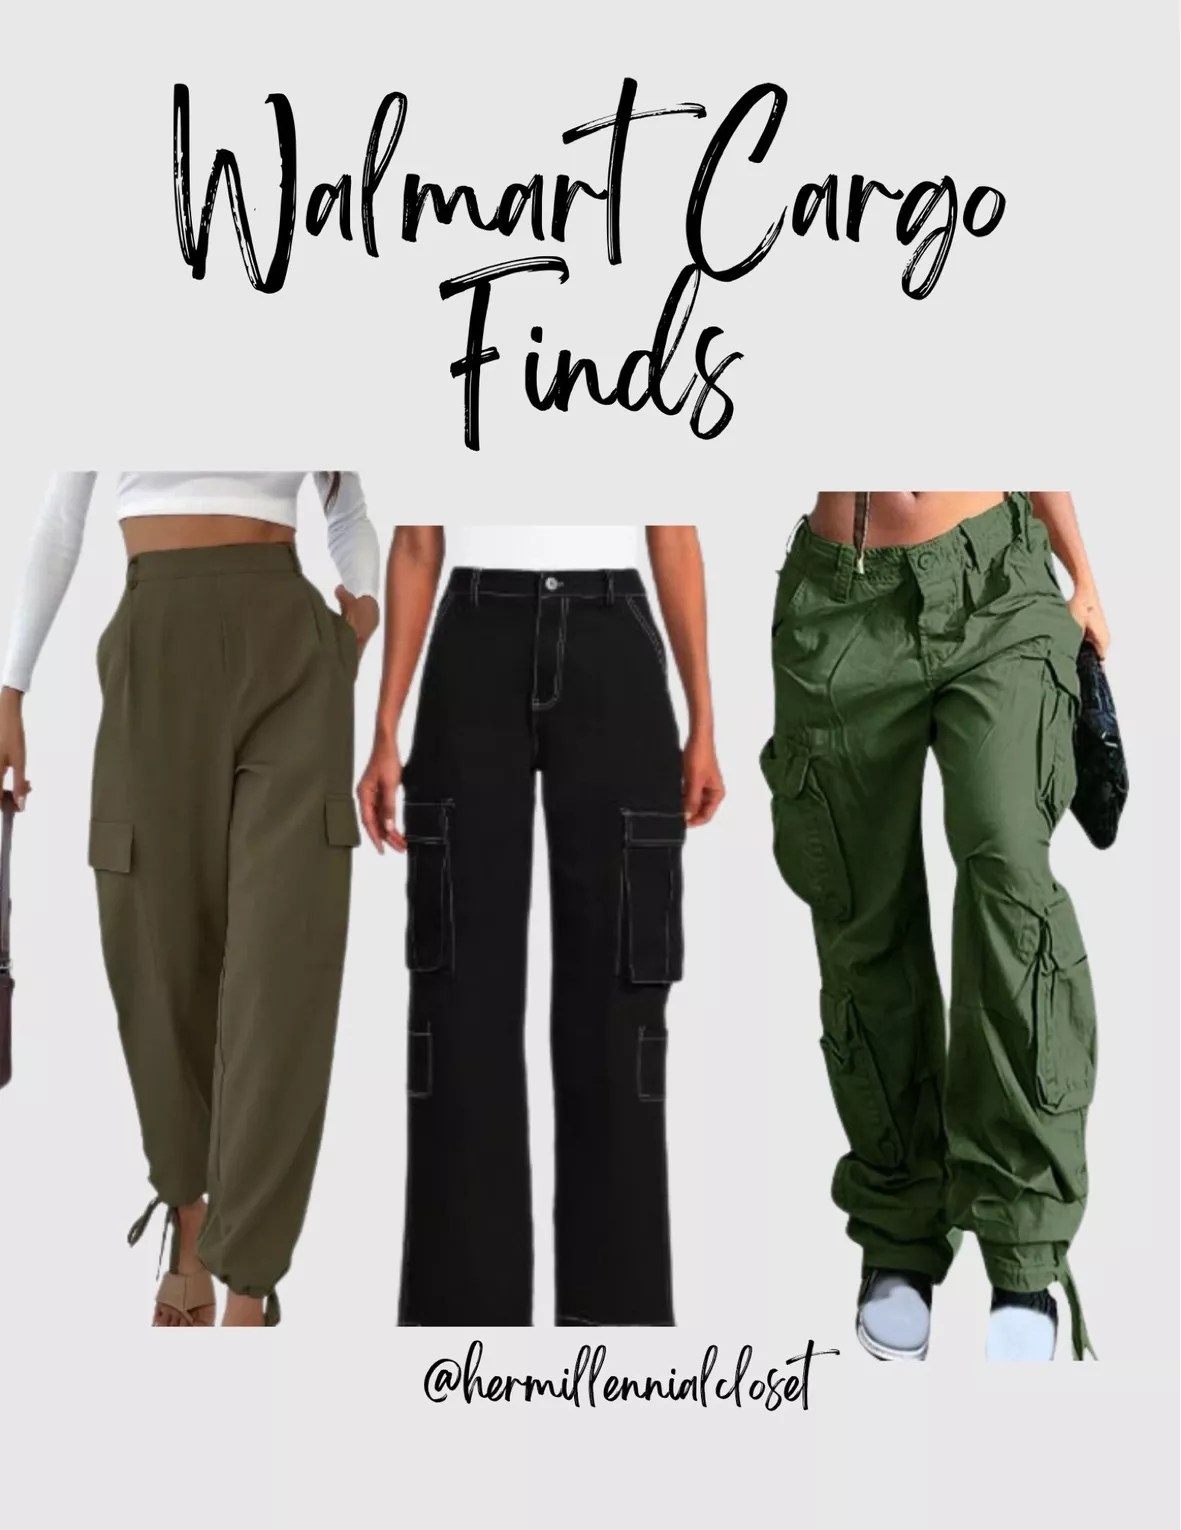 STARVNC Women Low-Waisted Multi Pockets Drawstring Cargo Pants